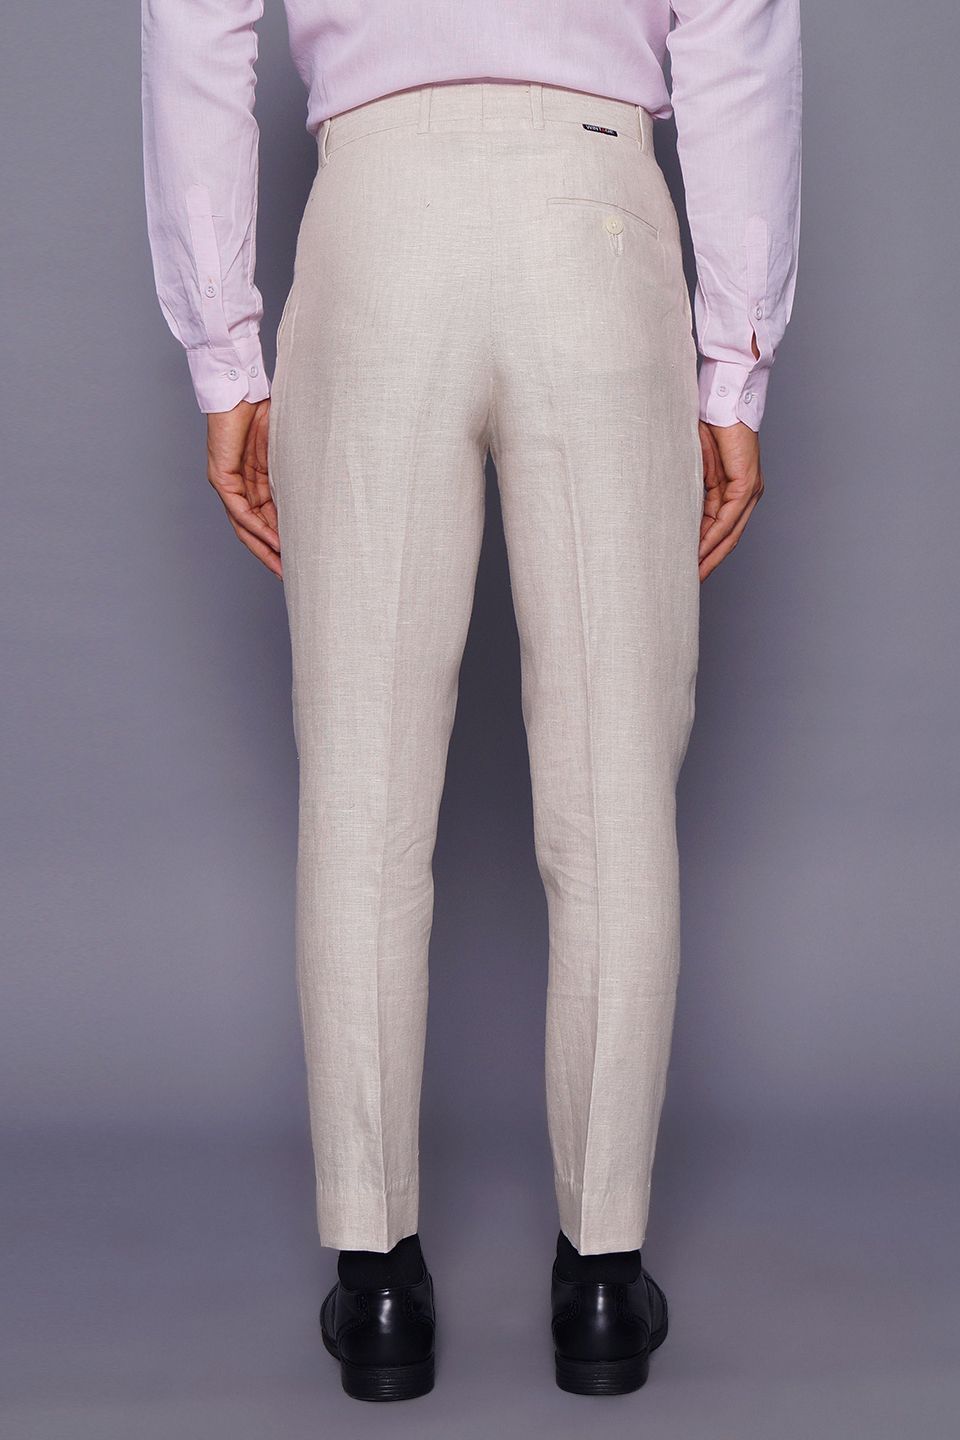 Wintage Men's Natural Regular Fit Pant 100% Linen 